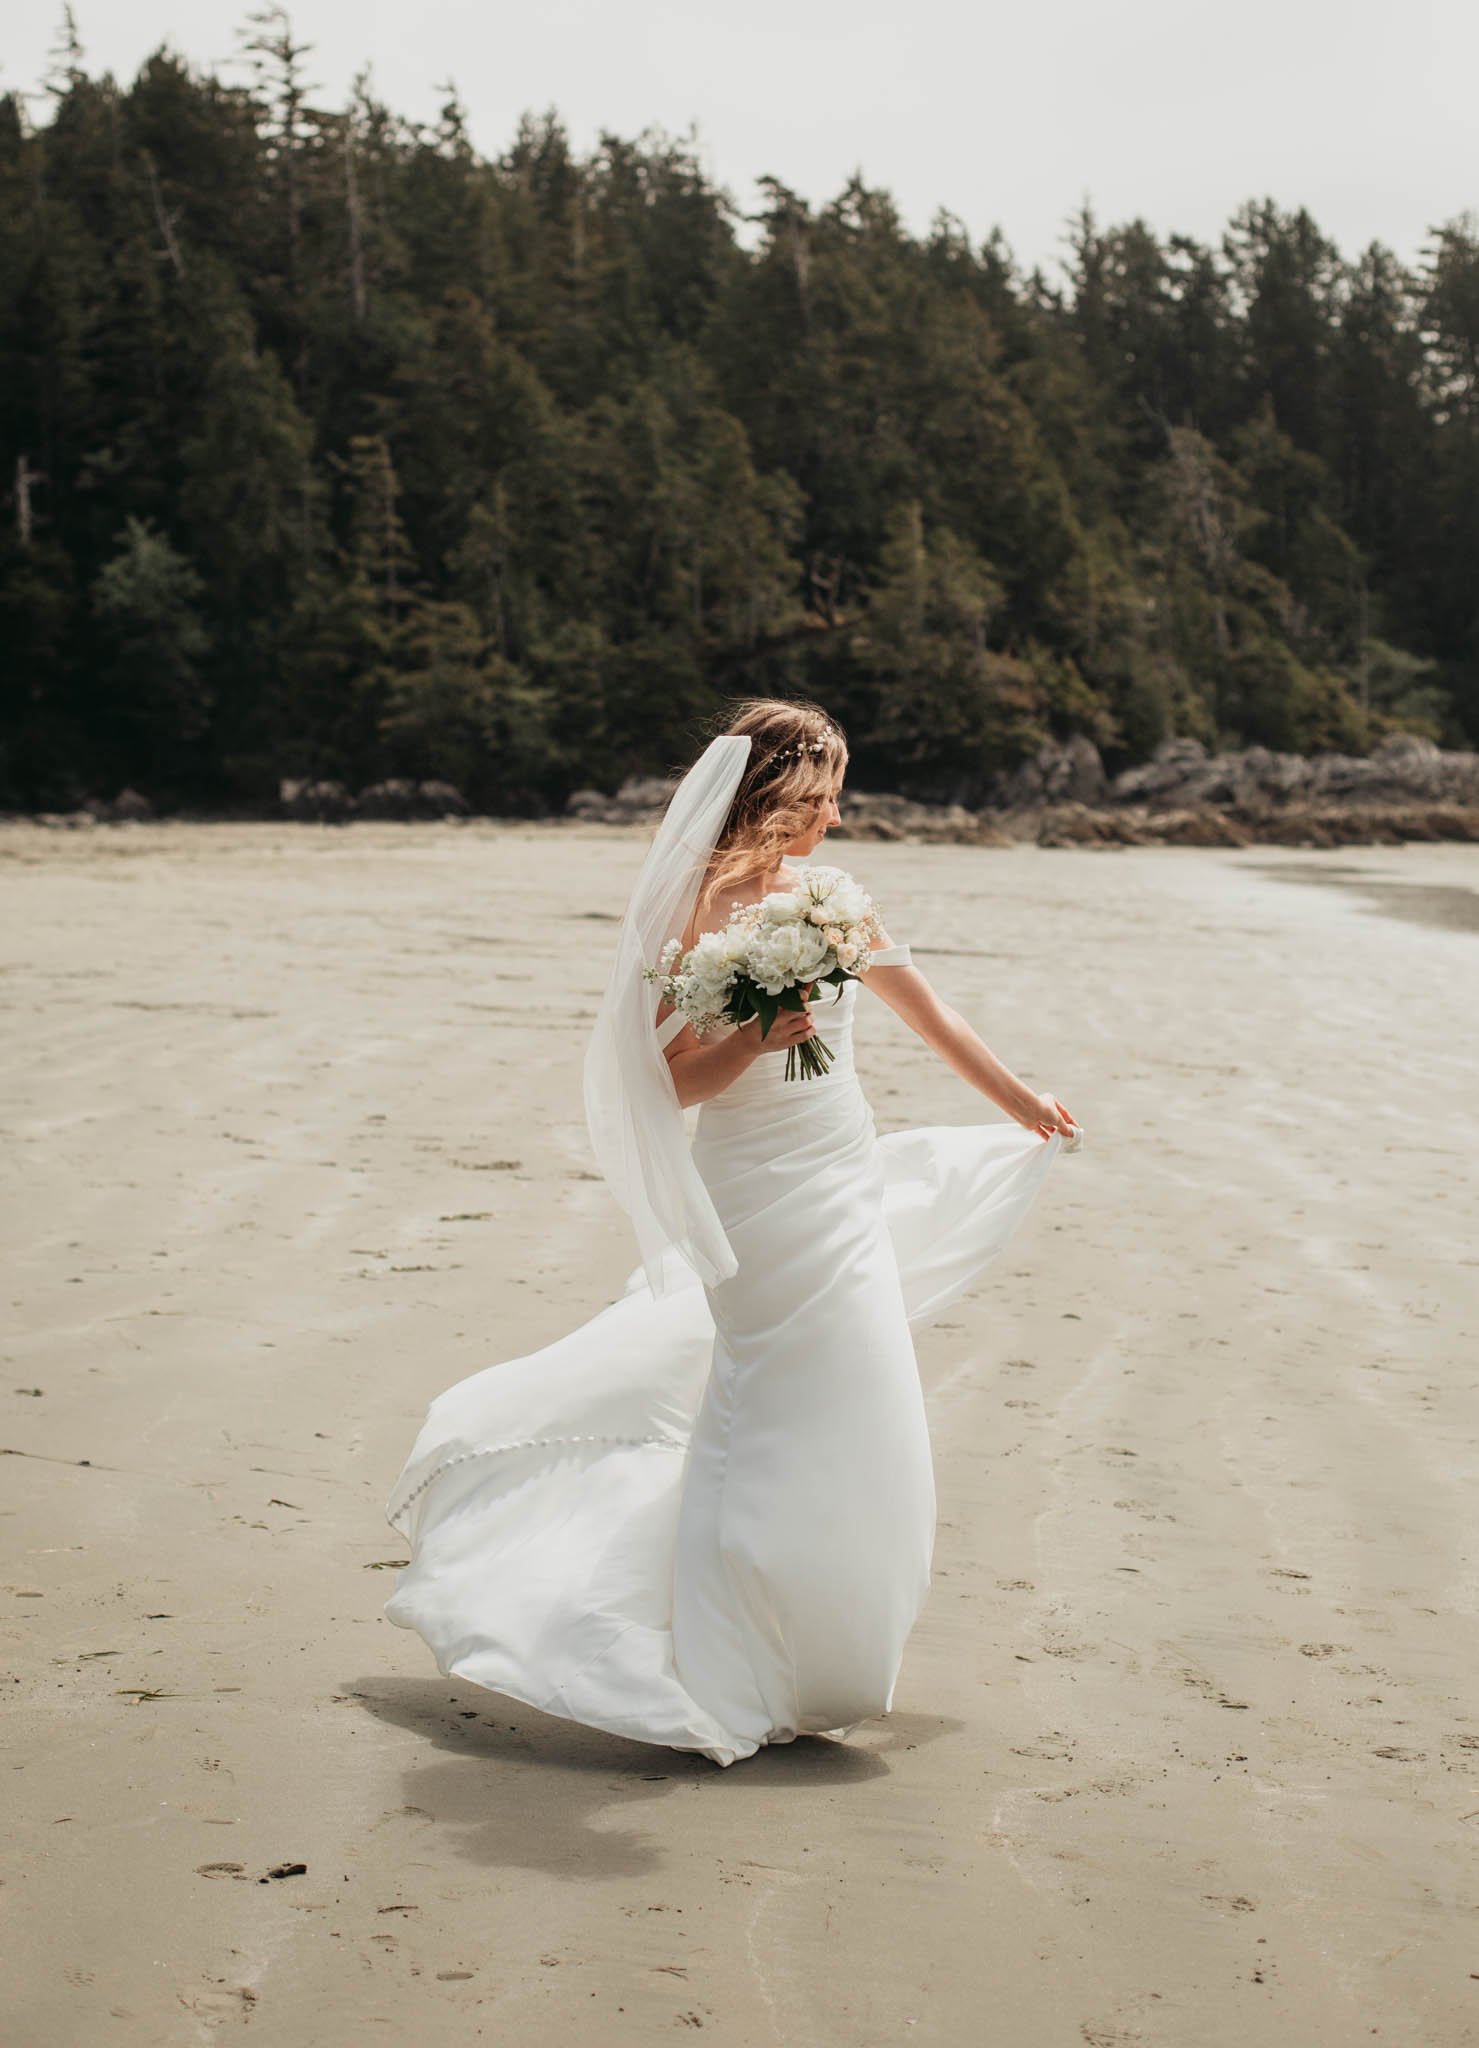 Kayla Kieran elopement - Tofino Vancouver Island British Columbia - Elyse Anna Photography-0615.jpg